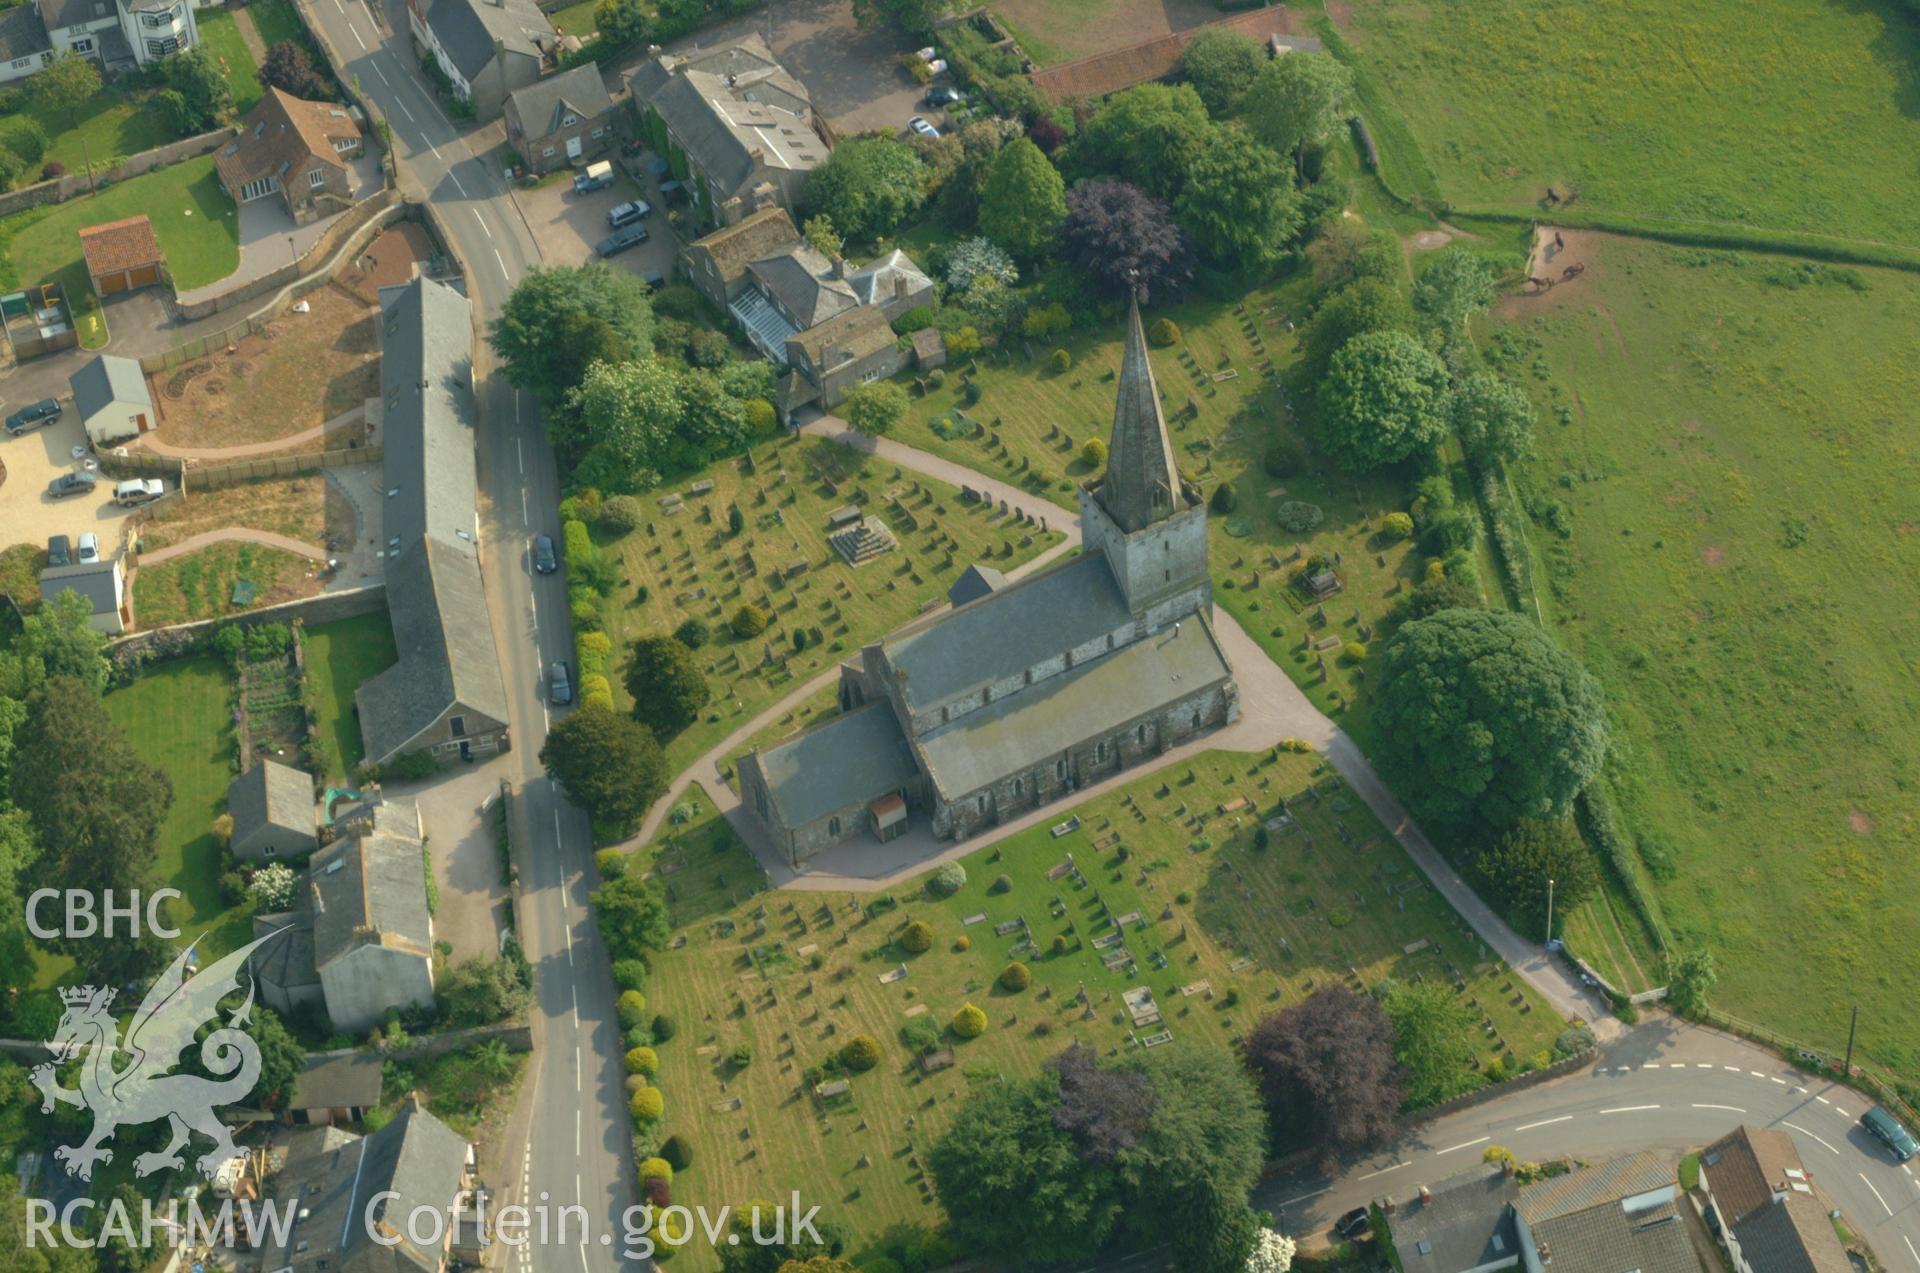 RCAHMW colour oblique aerial photograph of St Nicholas' Church, Trellech taken on 27/05/2004 by Toby Driver